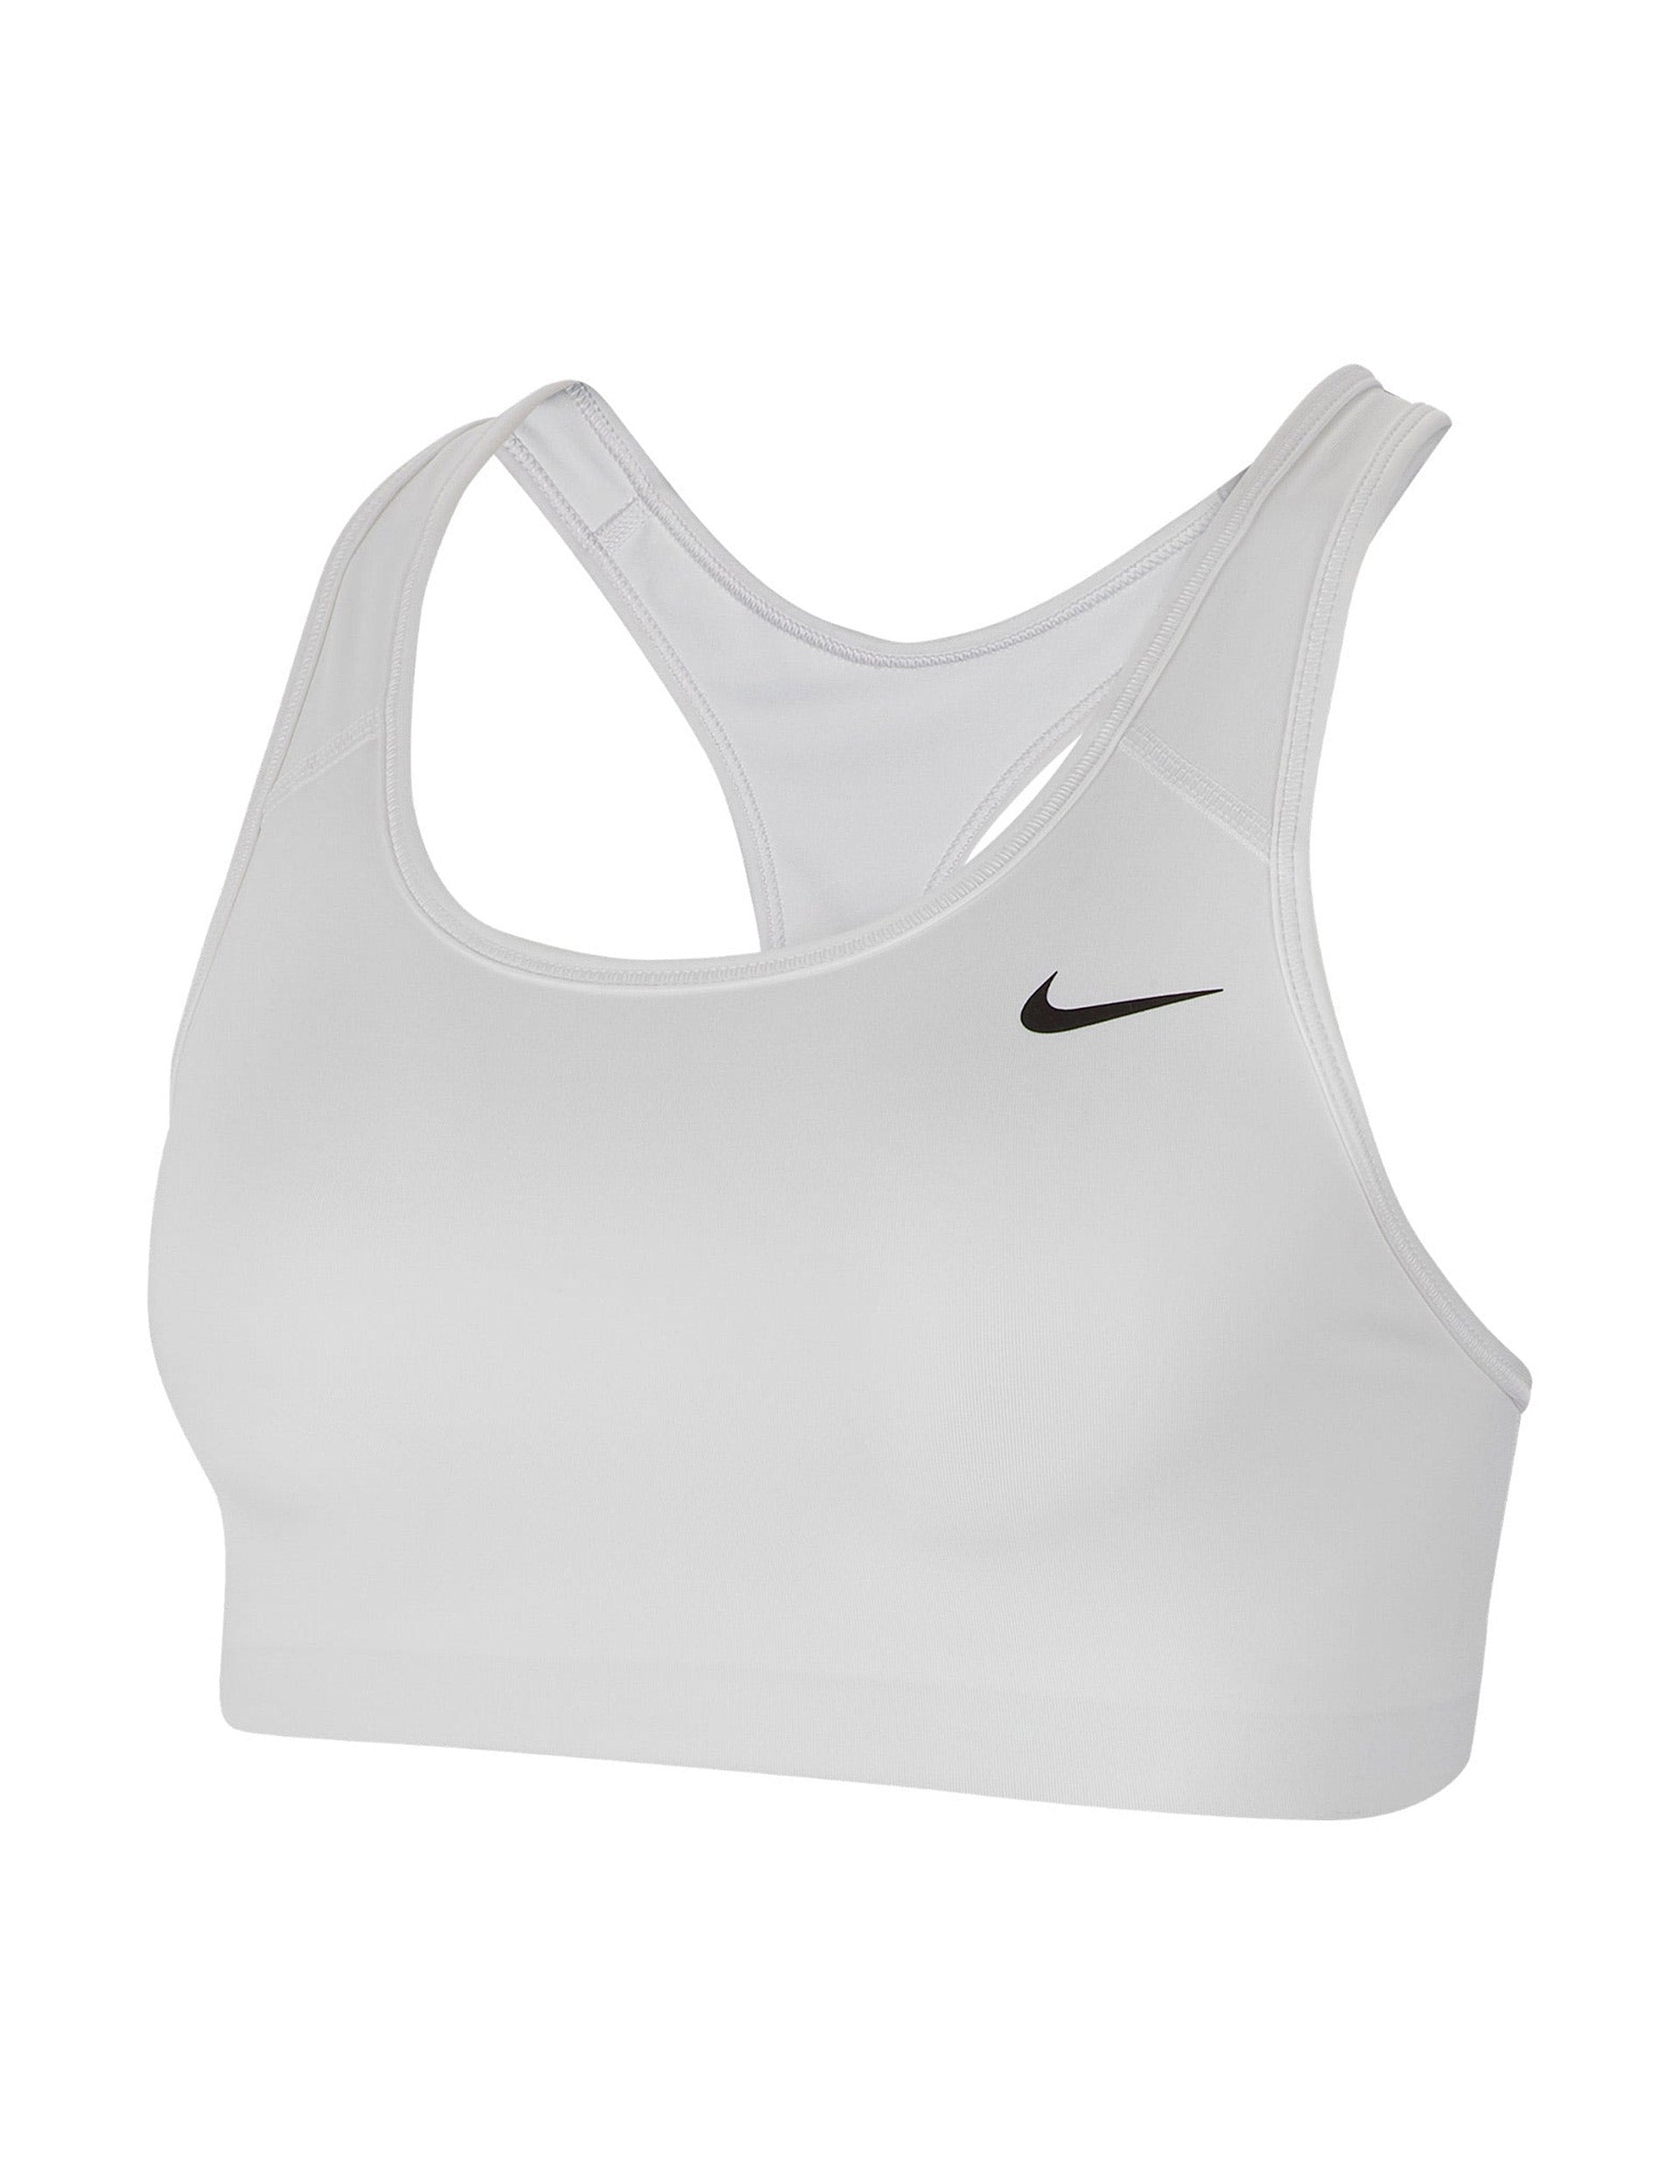 White Nike sports bra, size large - Depop